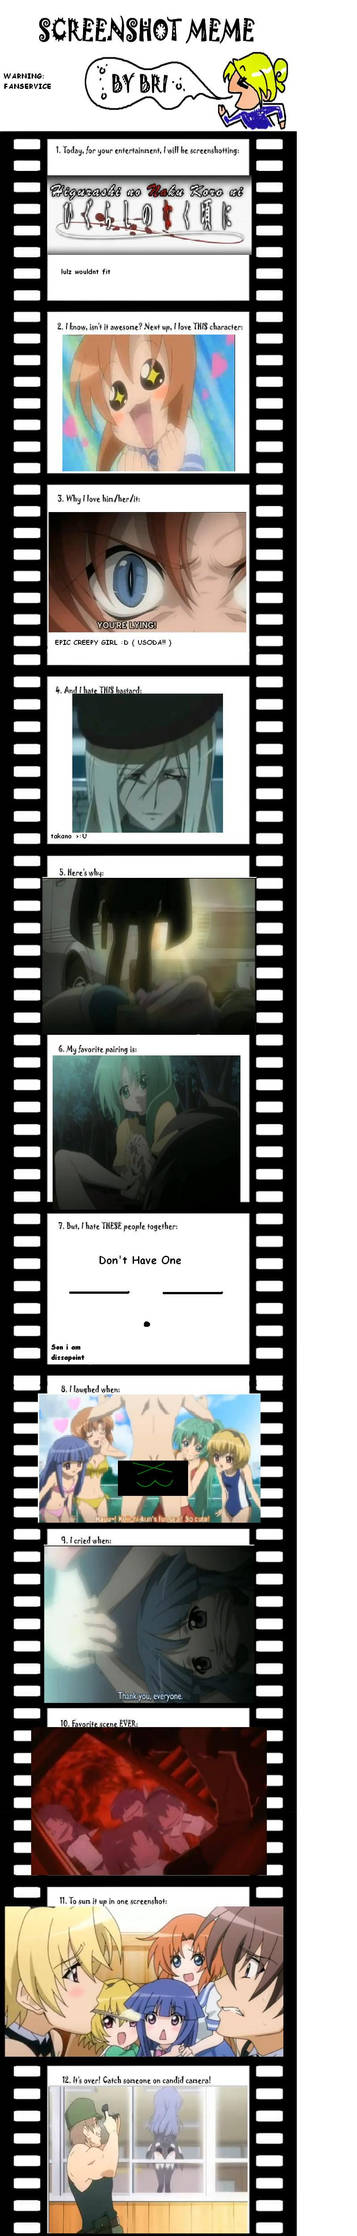 Higurashi Screenshot Meme